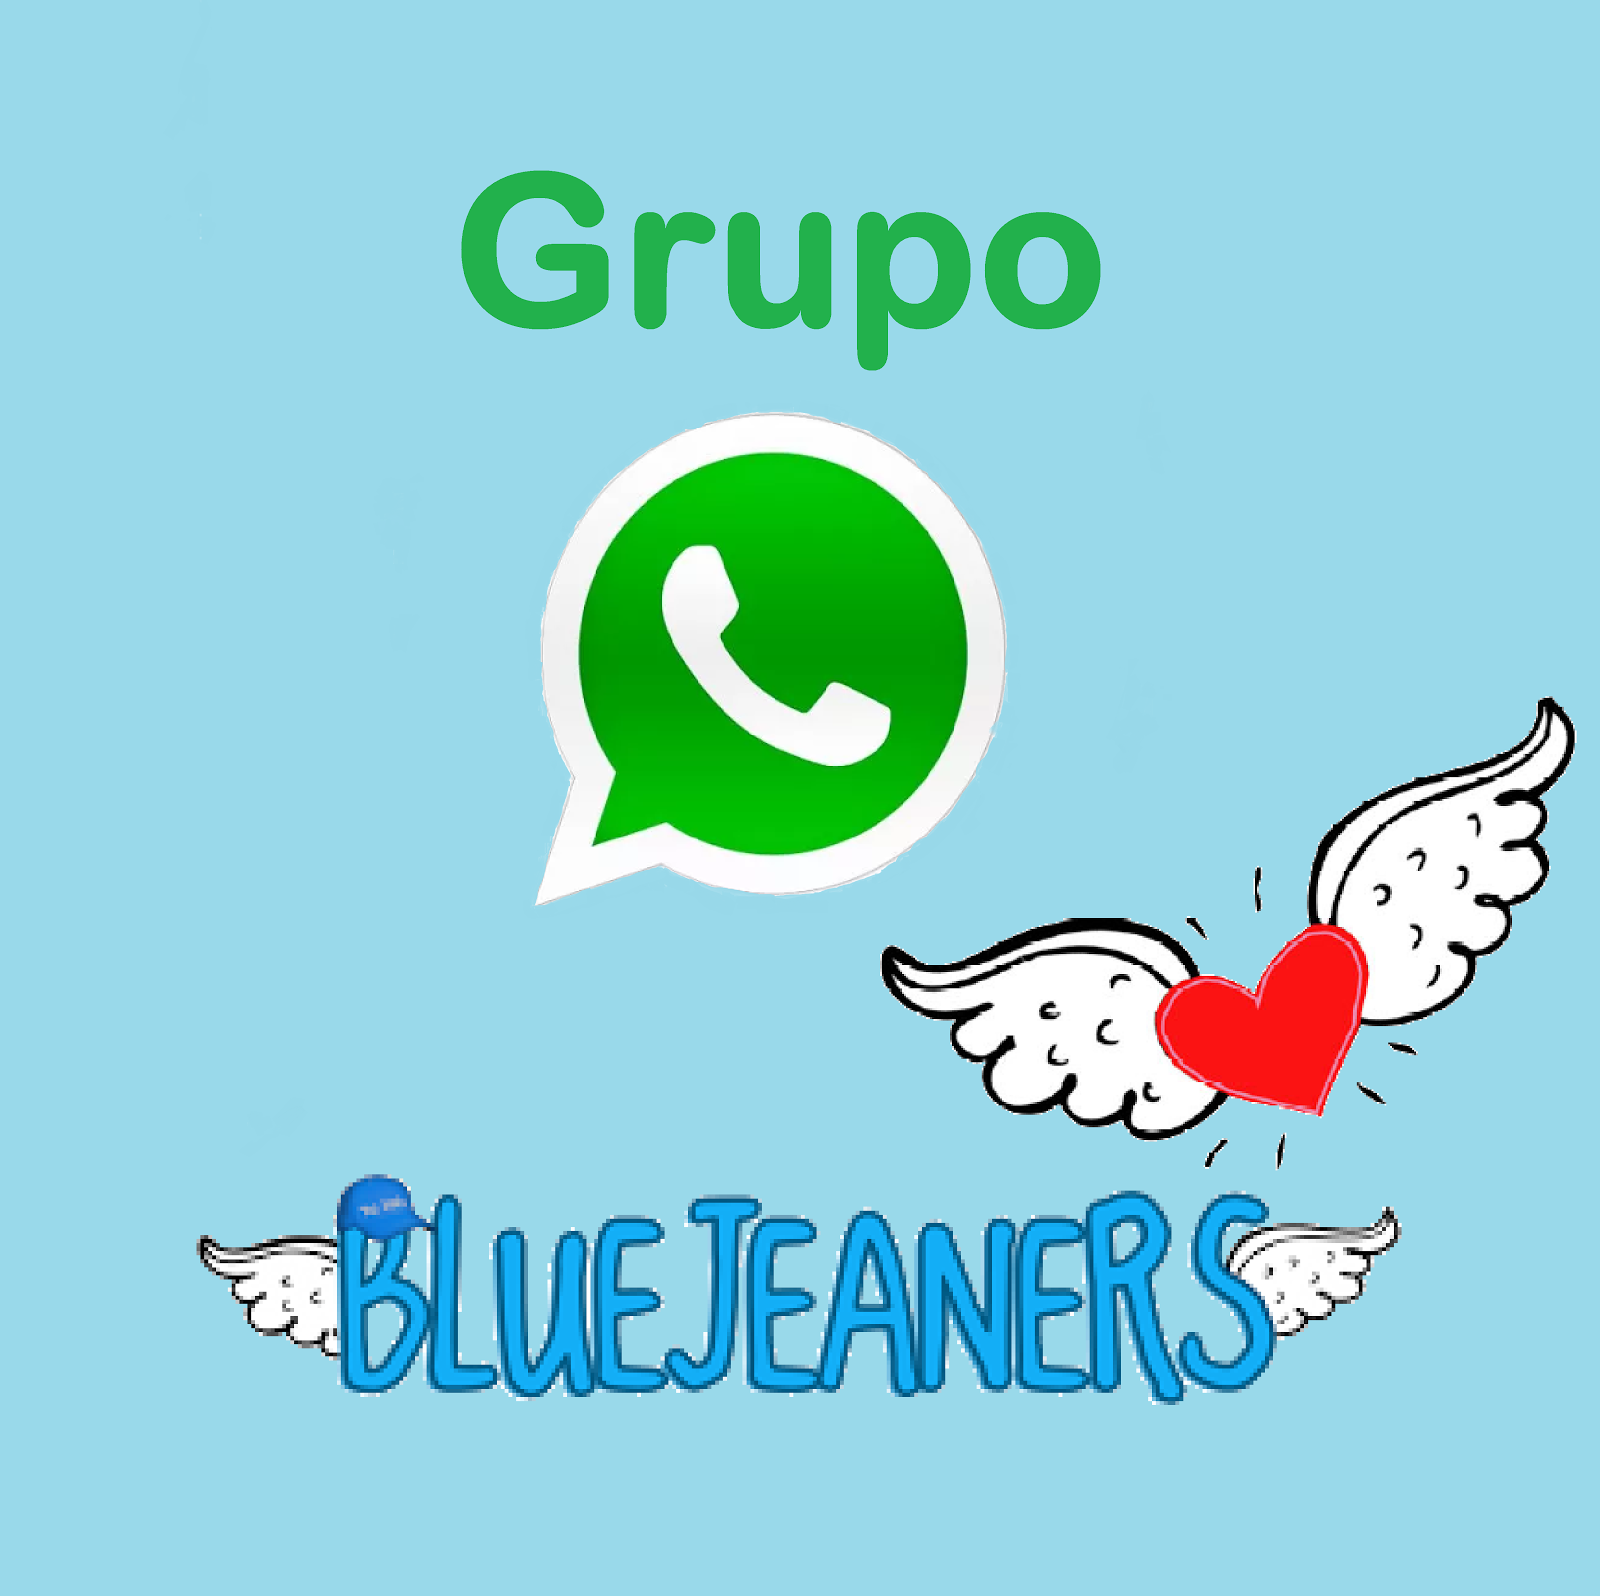 Grupo WA Bluejeaners